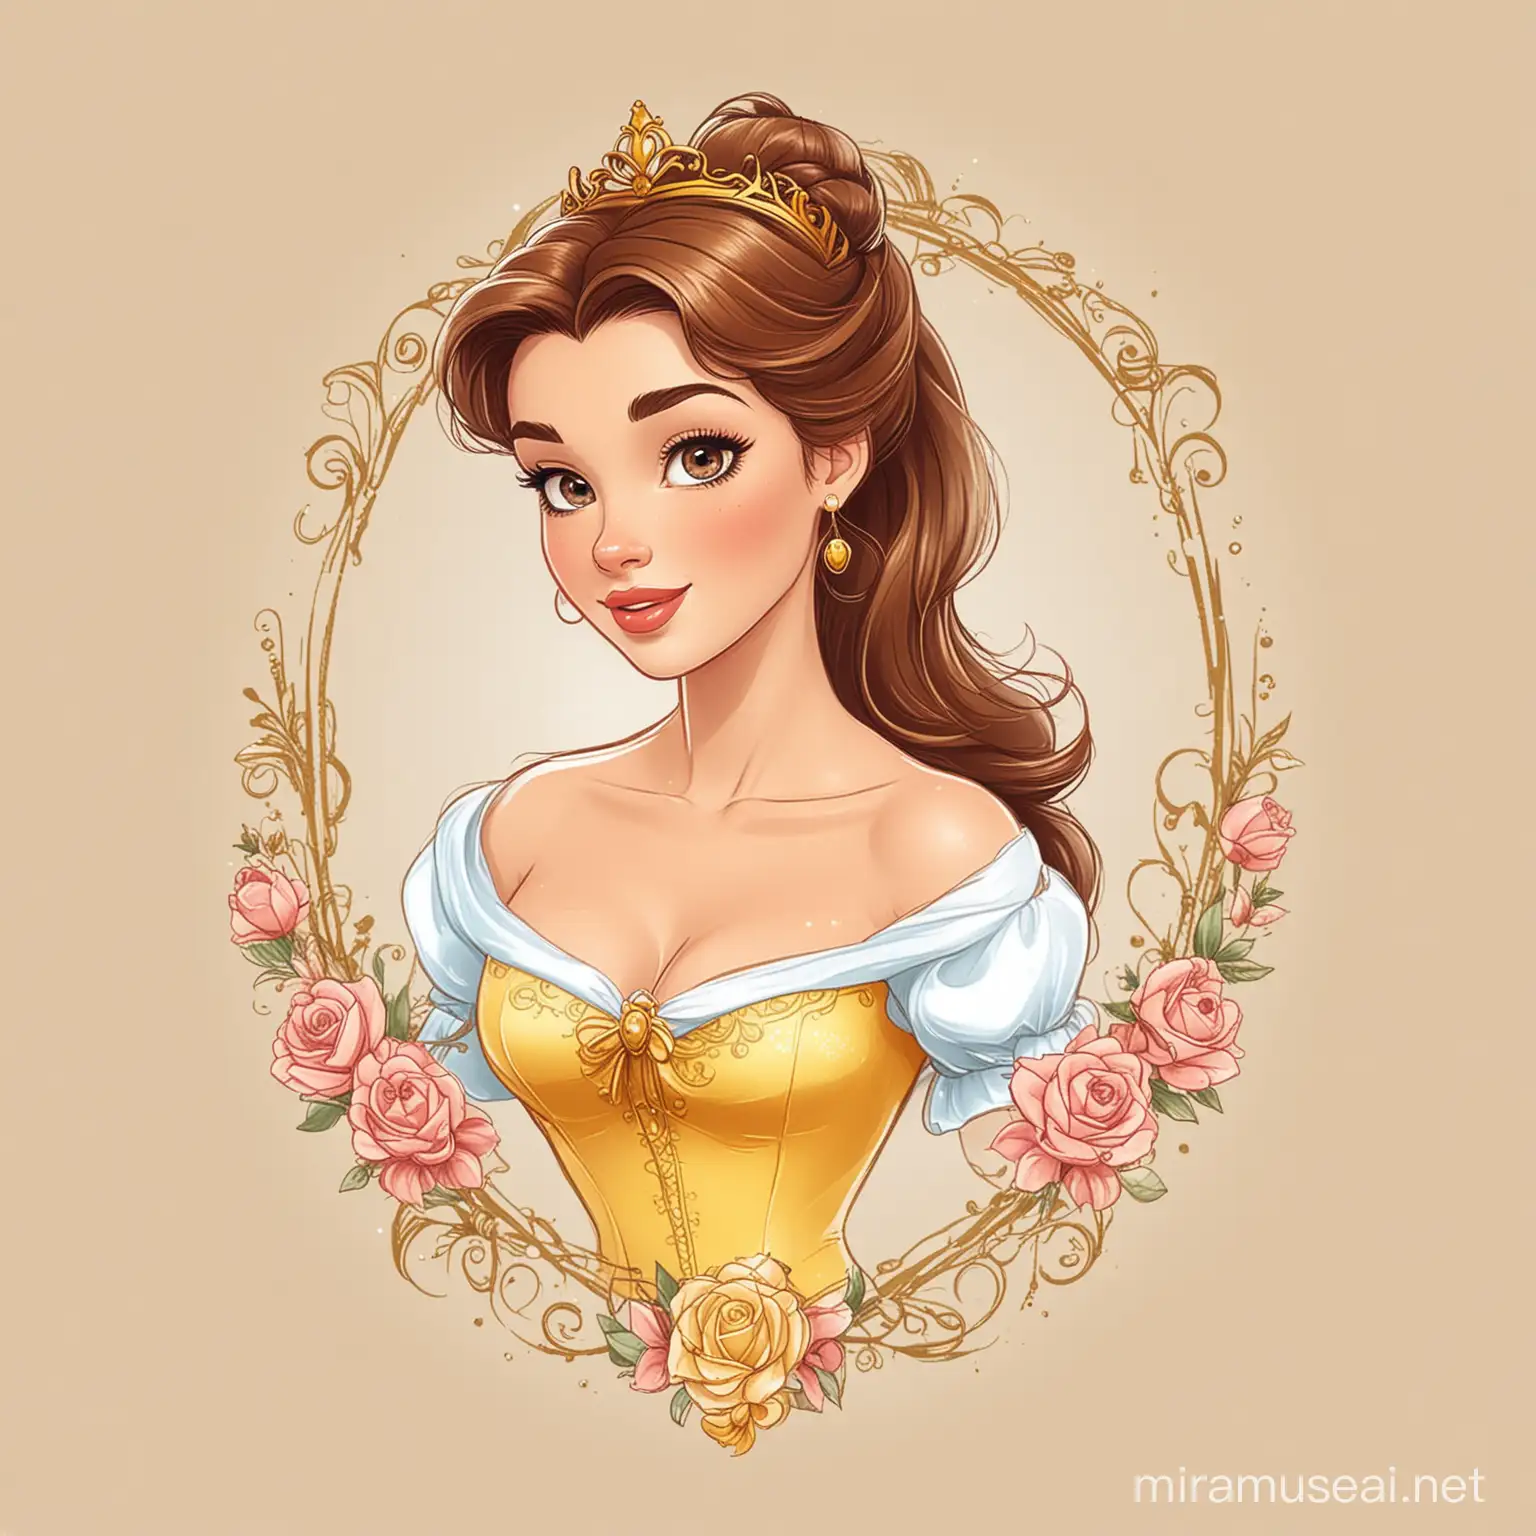 Disney Princess Belle Vector Design on White Background for TShirt